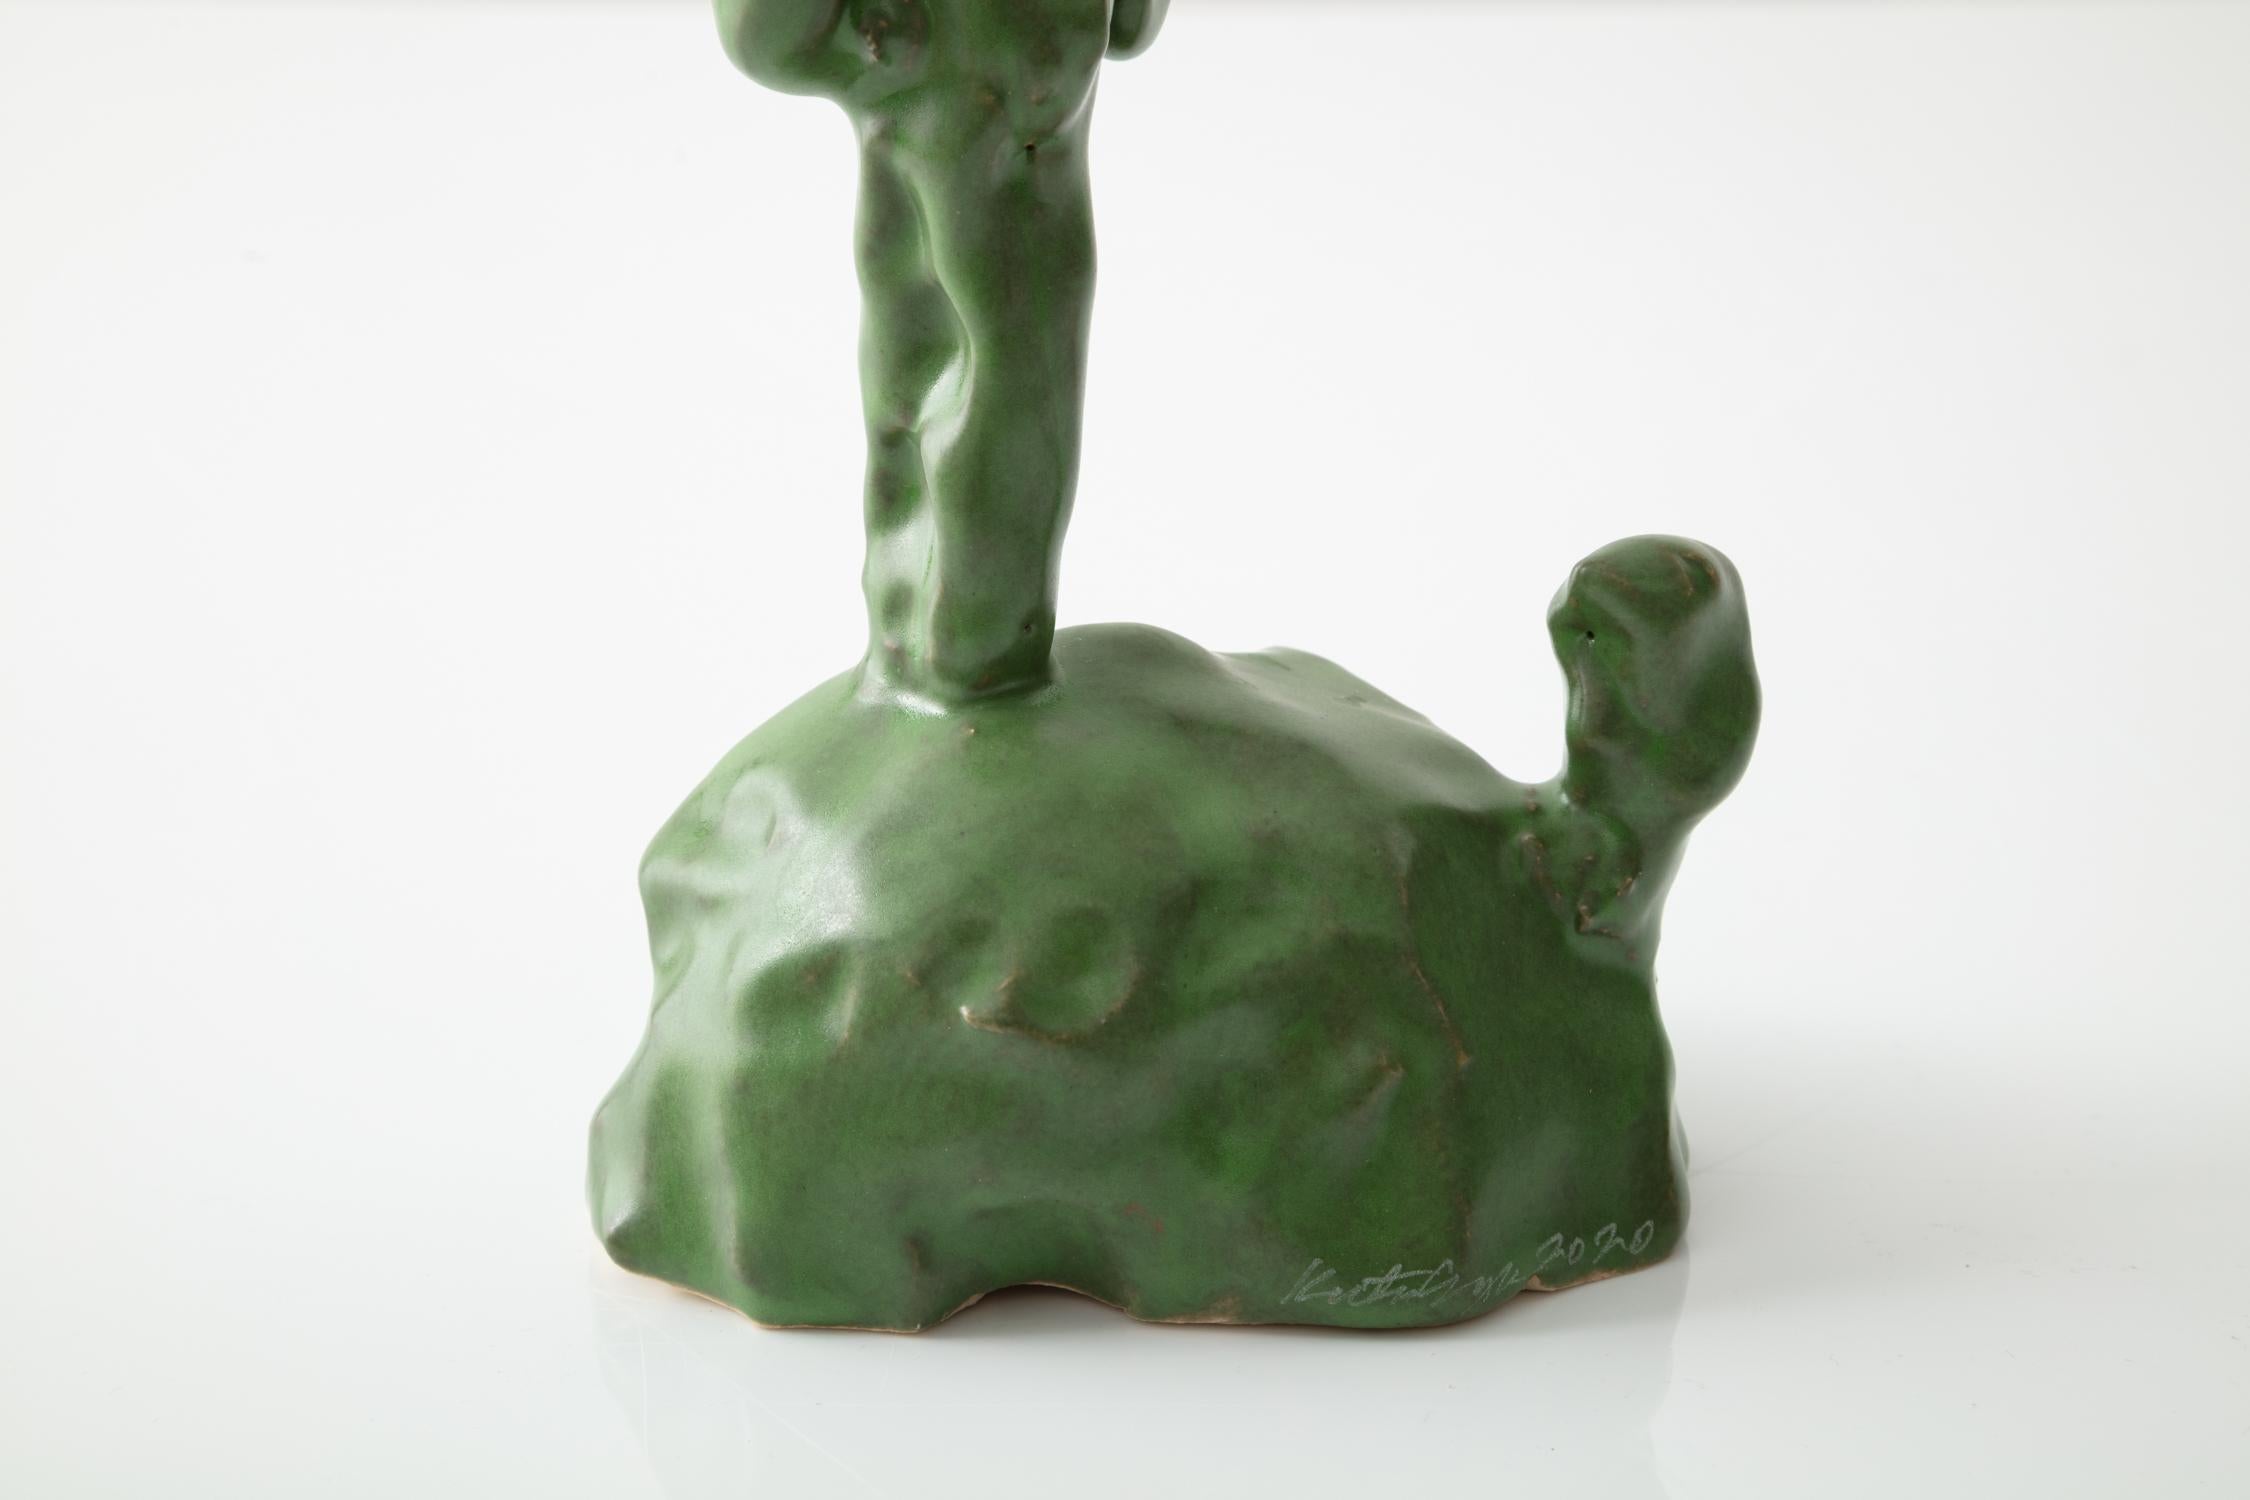 Américain Sculpture de cactus en céramique émaillée verte « Green Cacti » en vente